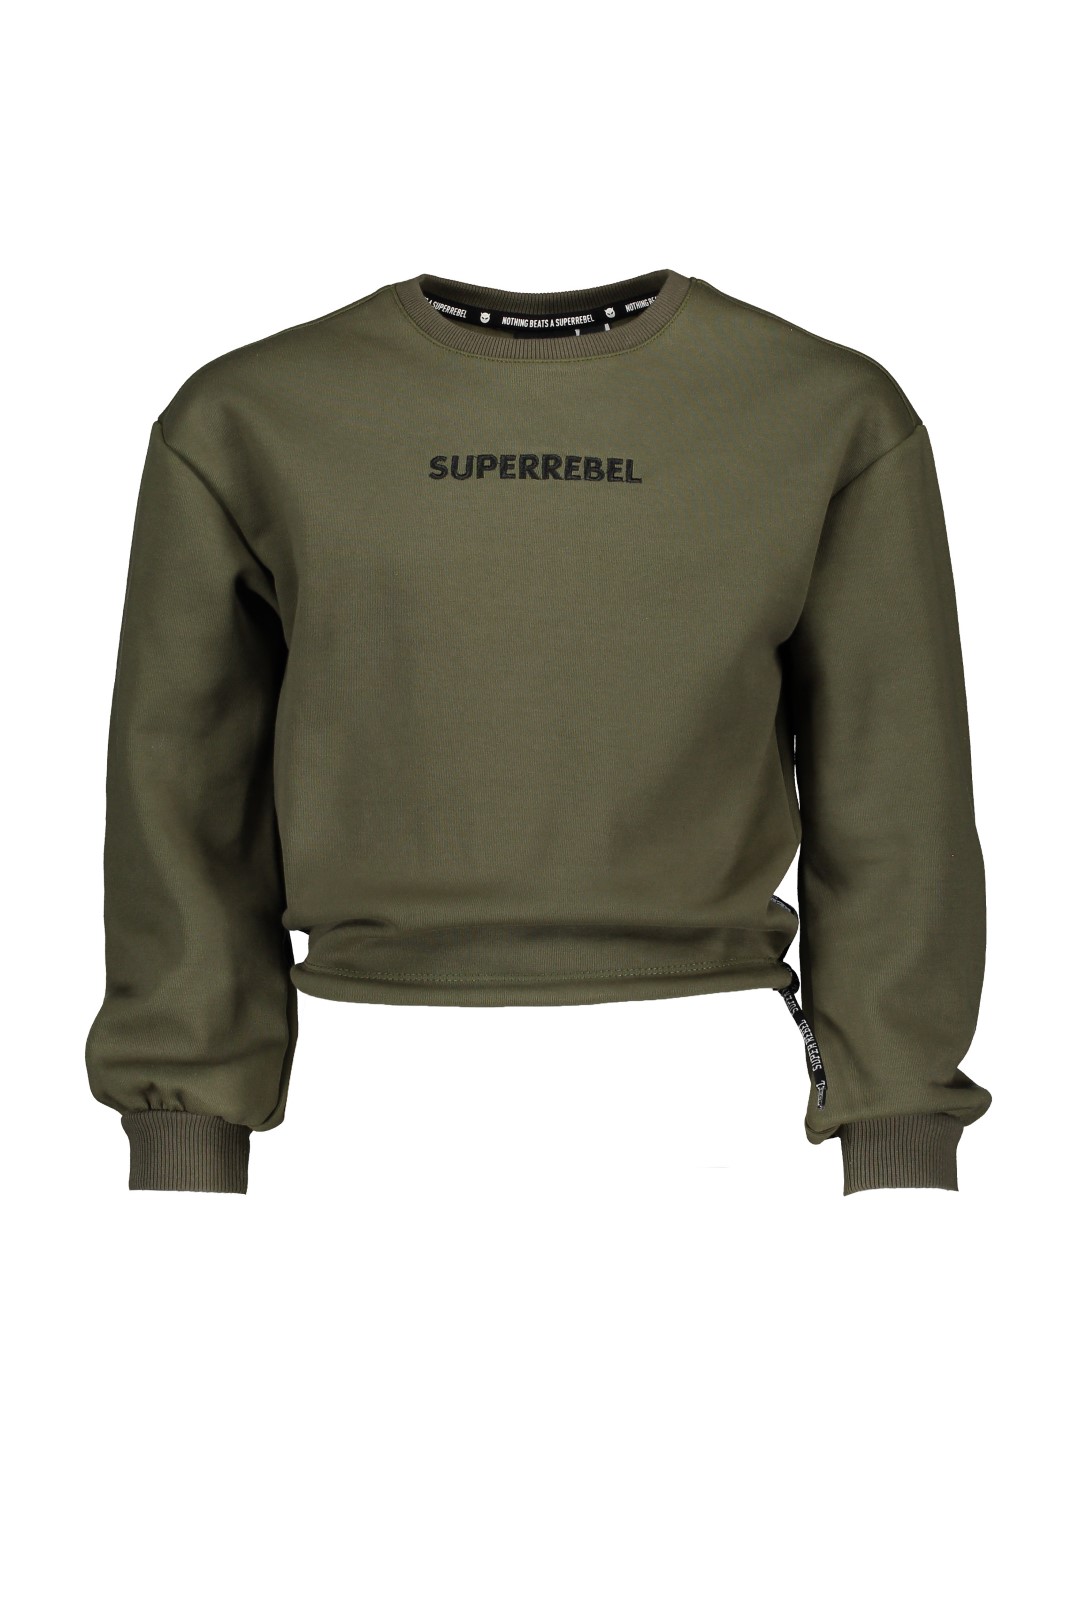 Superrebel Girls Spoof Sweater